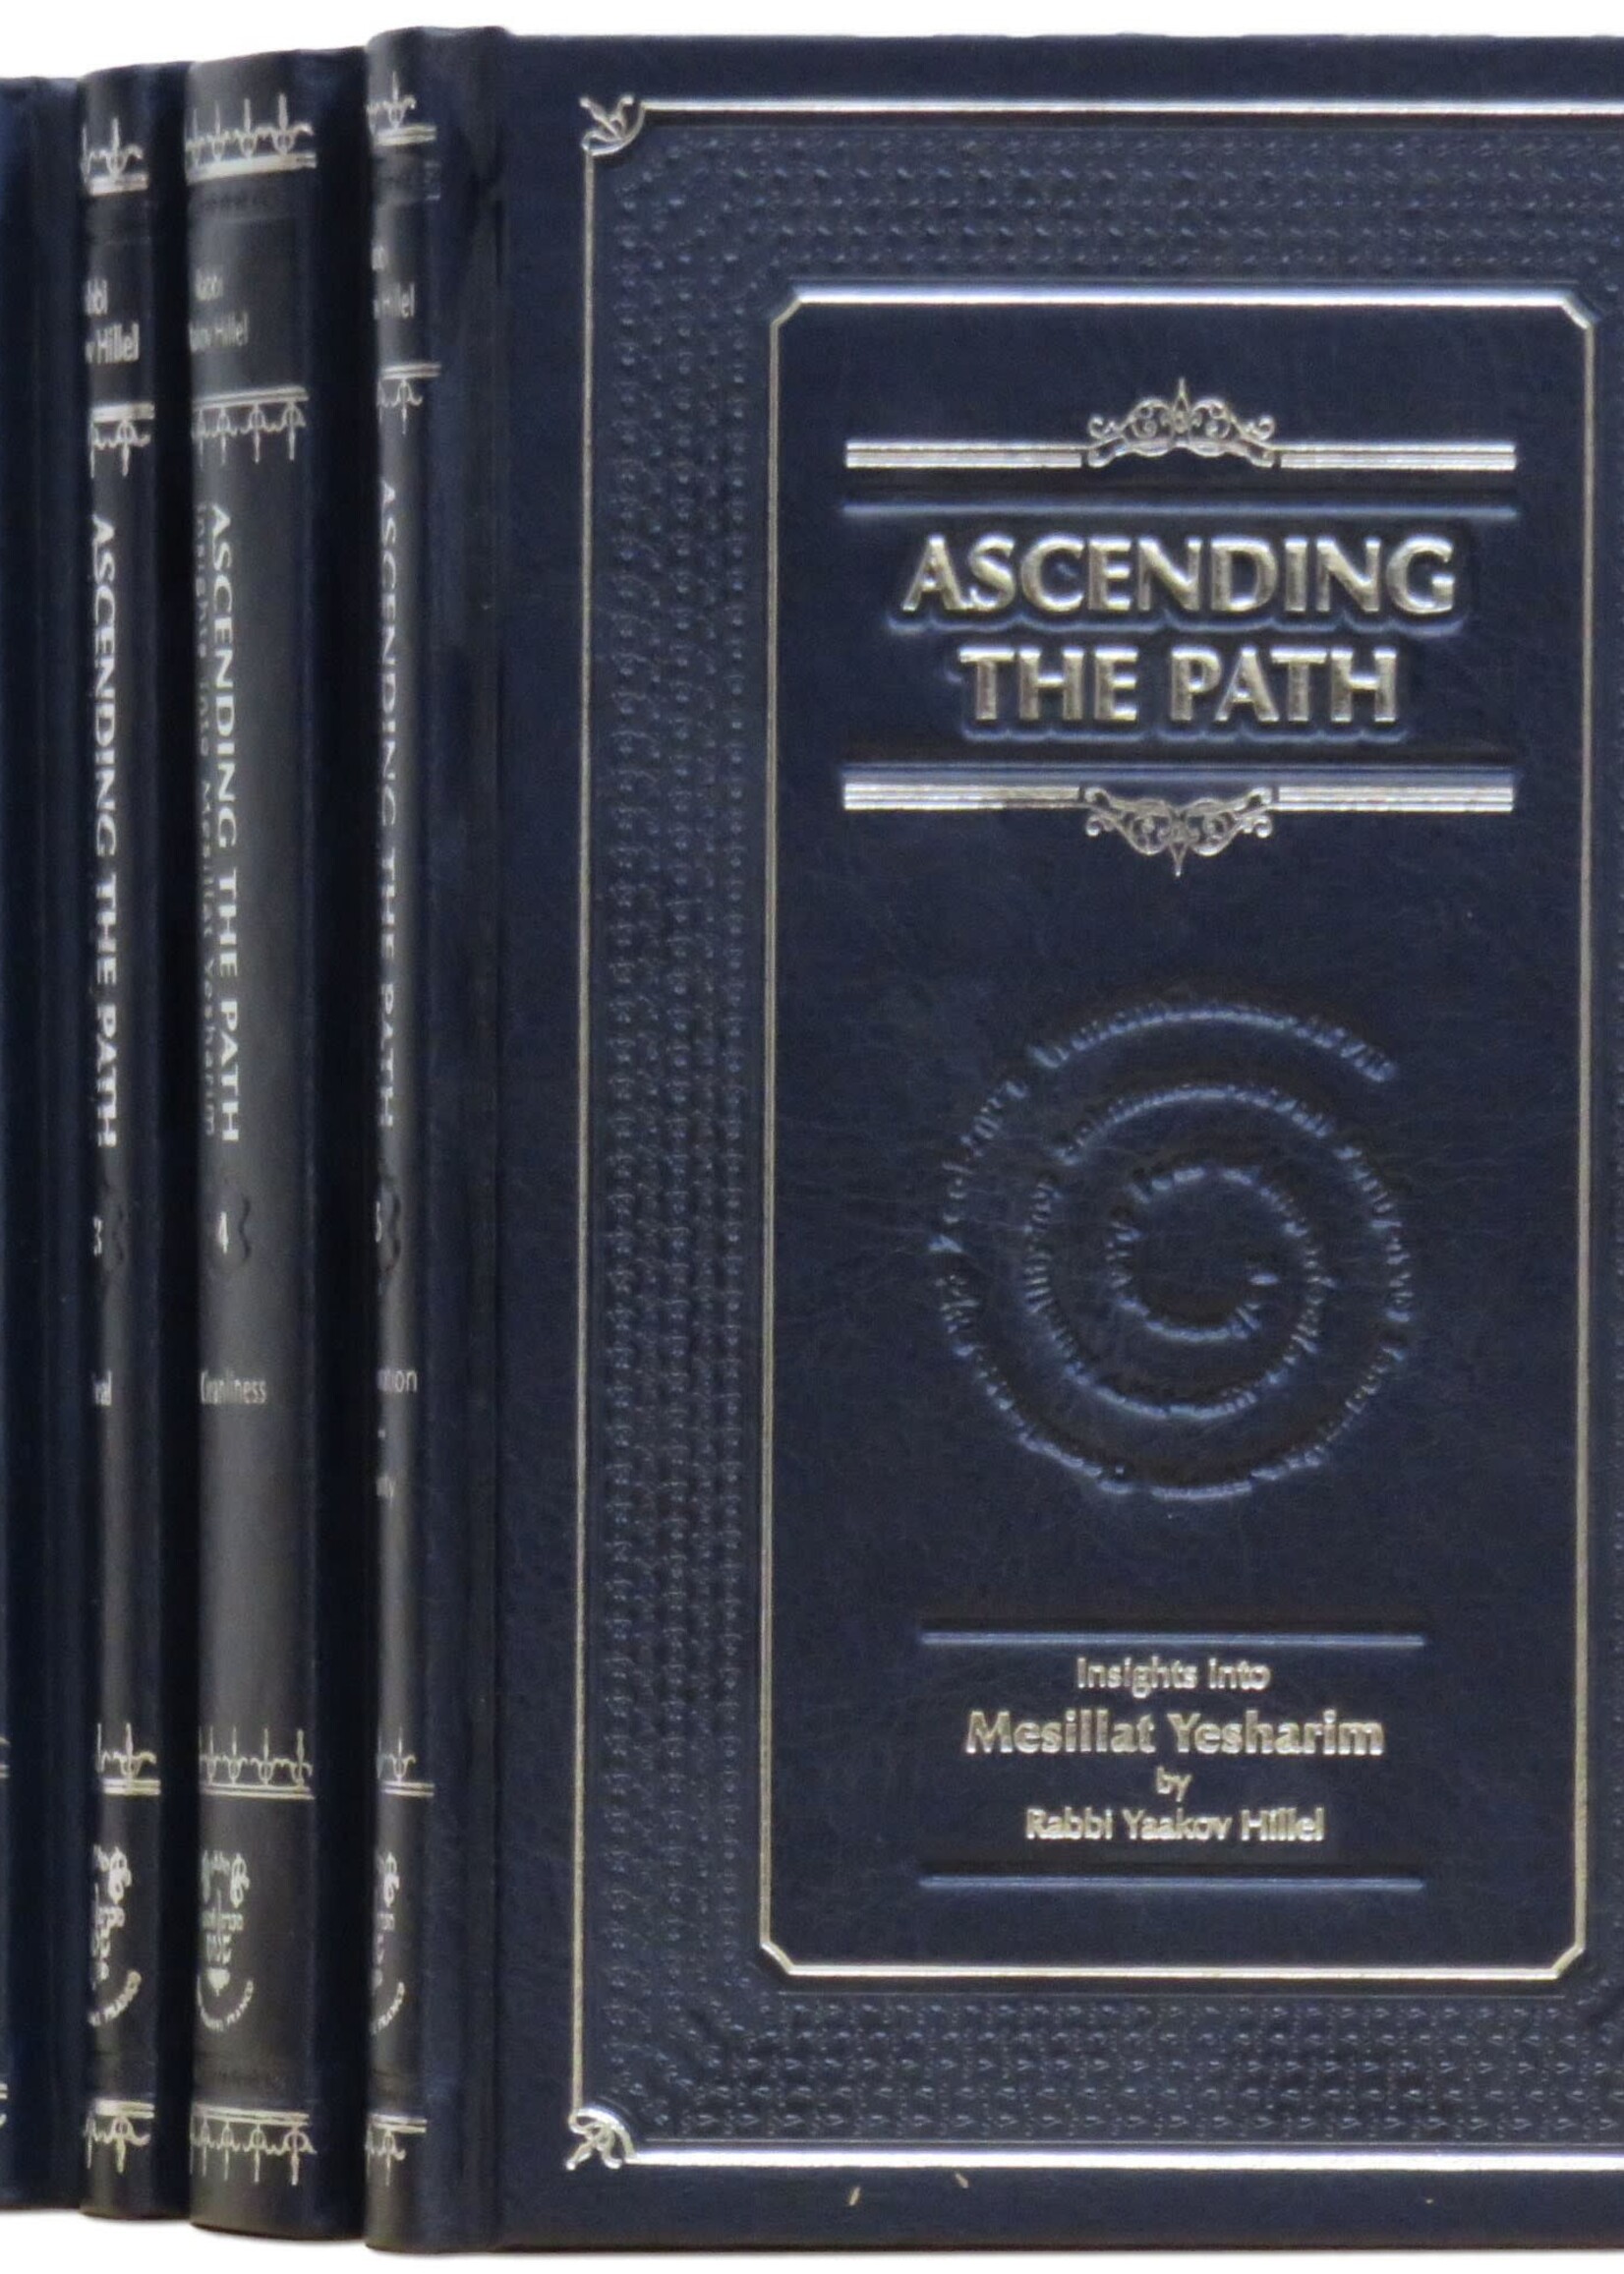 Rabbi Yaakov Hillel Ascending The Path - Insight into Mesillat Yesharim [5 volumes]